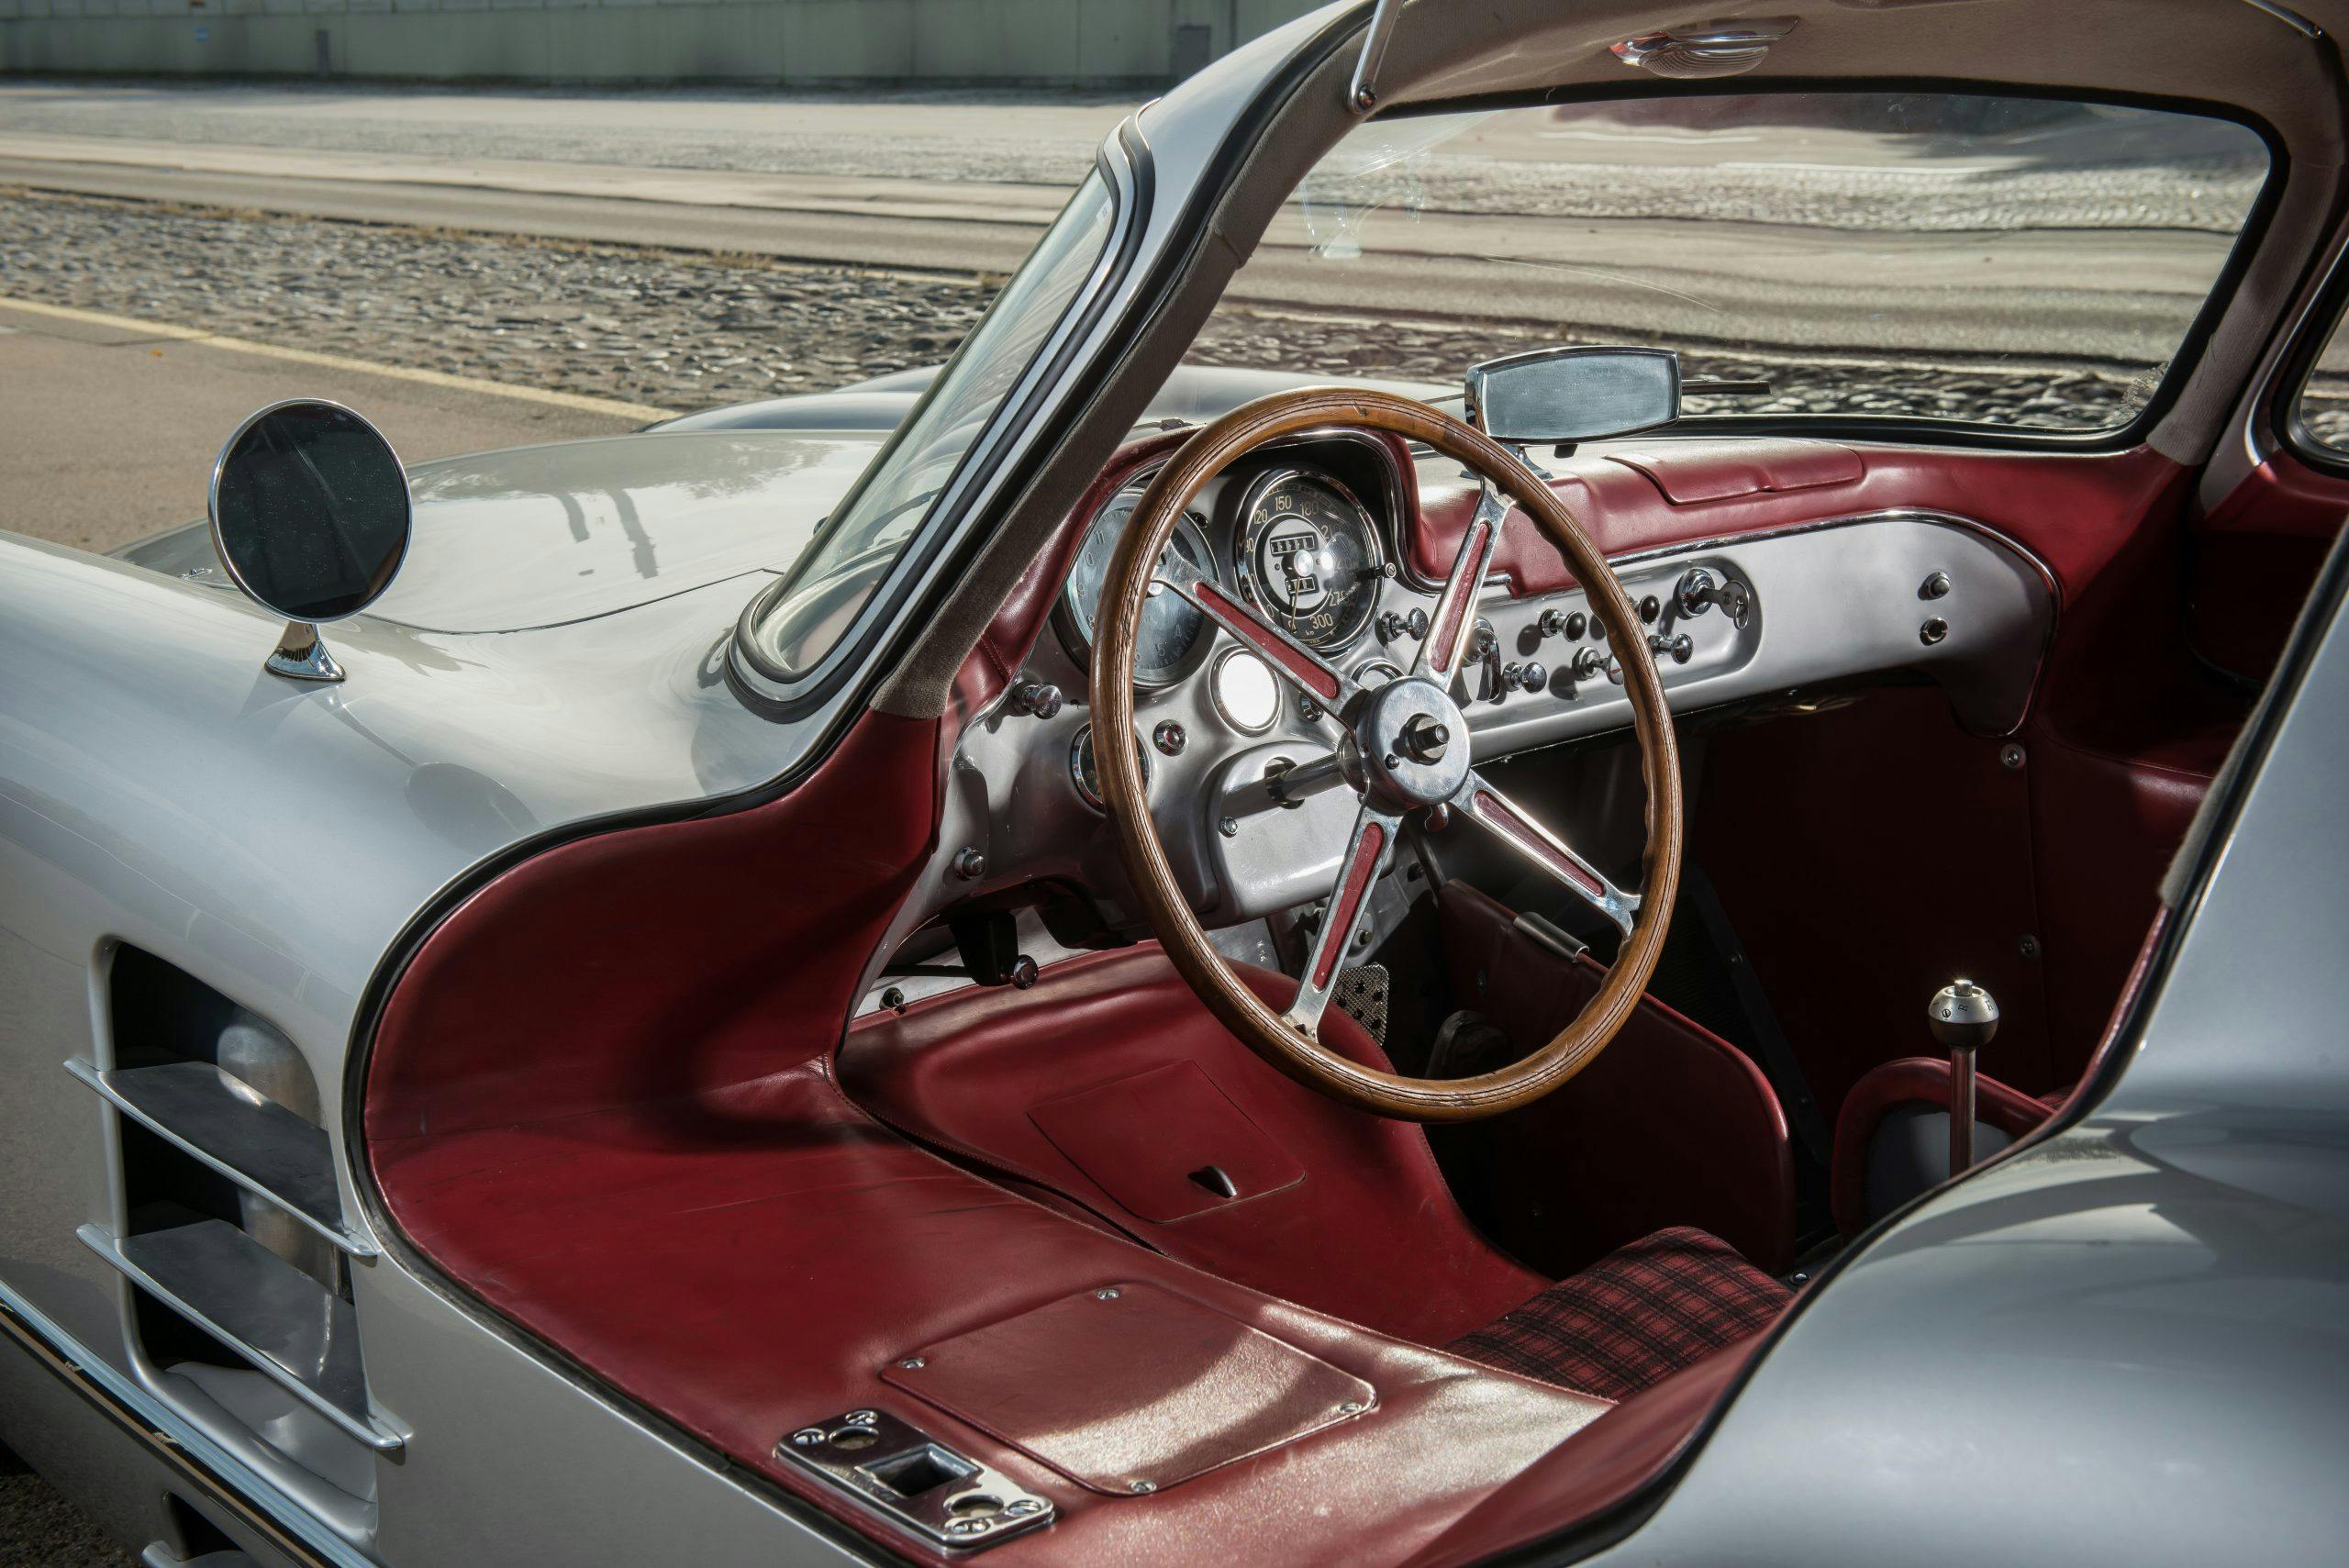 Mercedes-Benz Silver Arrow Uhlenhaut Coupe interior